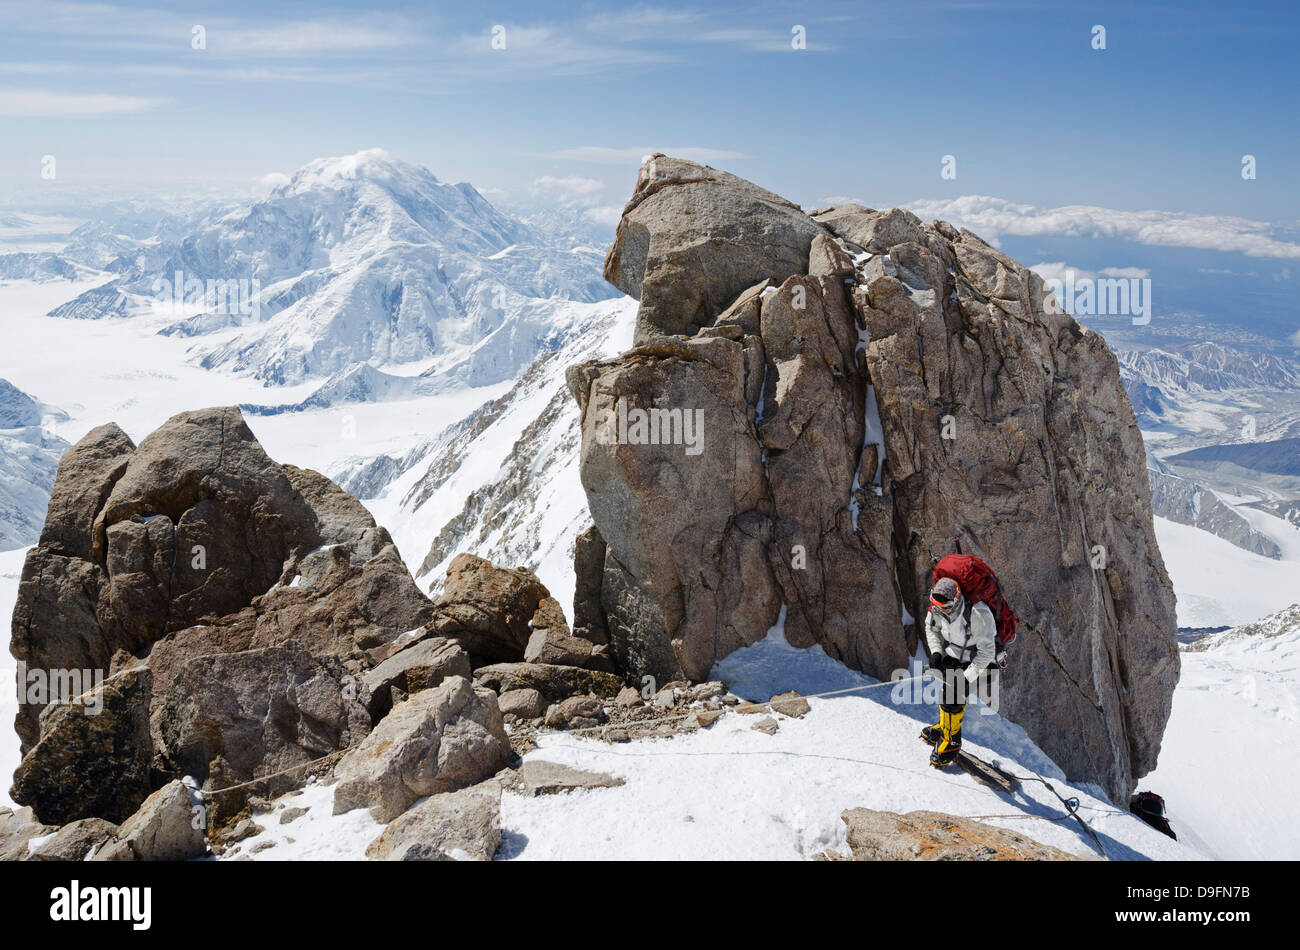 Klettern Expedition auf den Mount McKinley, 6194m, Denali National Park, Alaska, USA Stockfoto